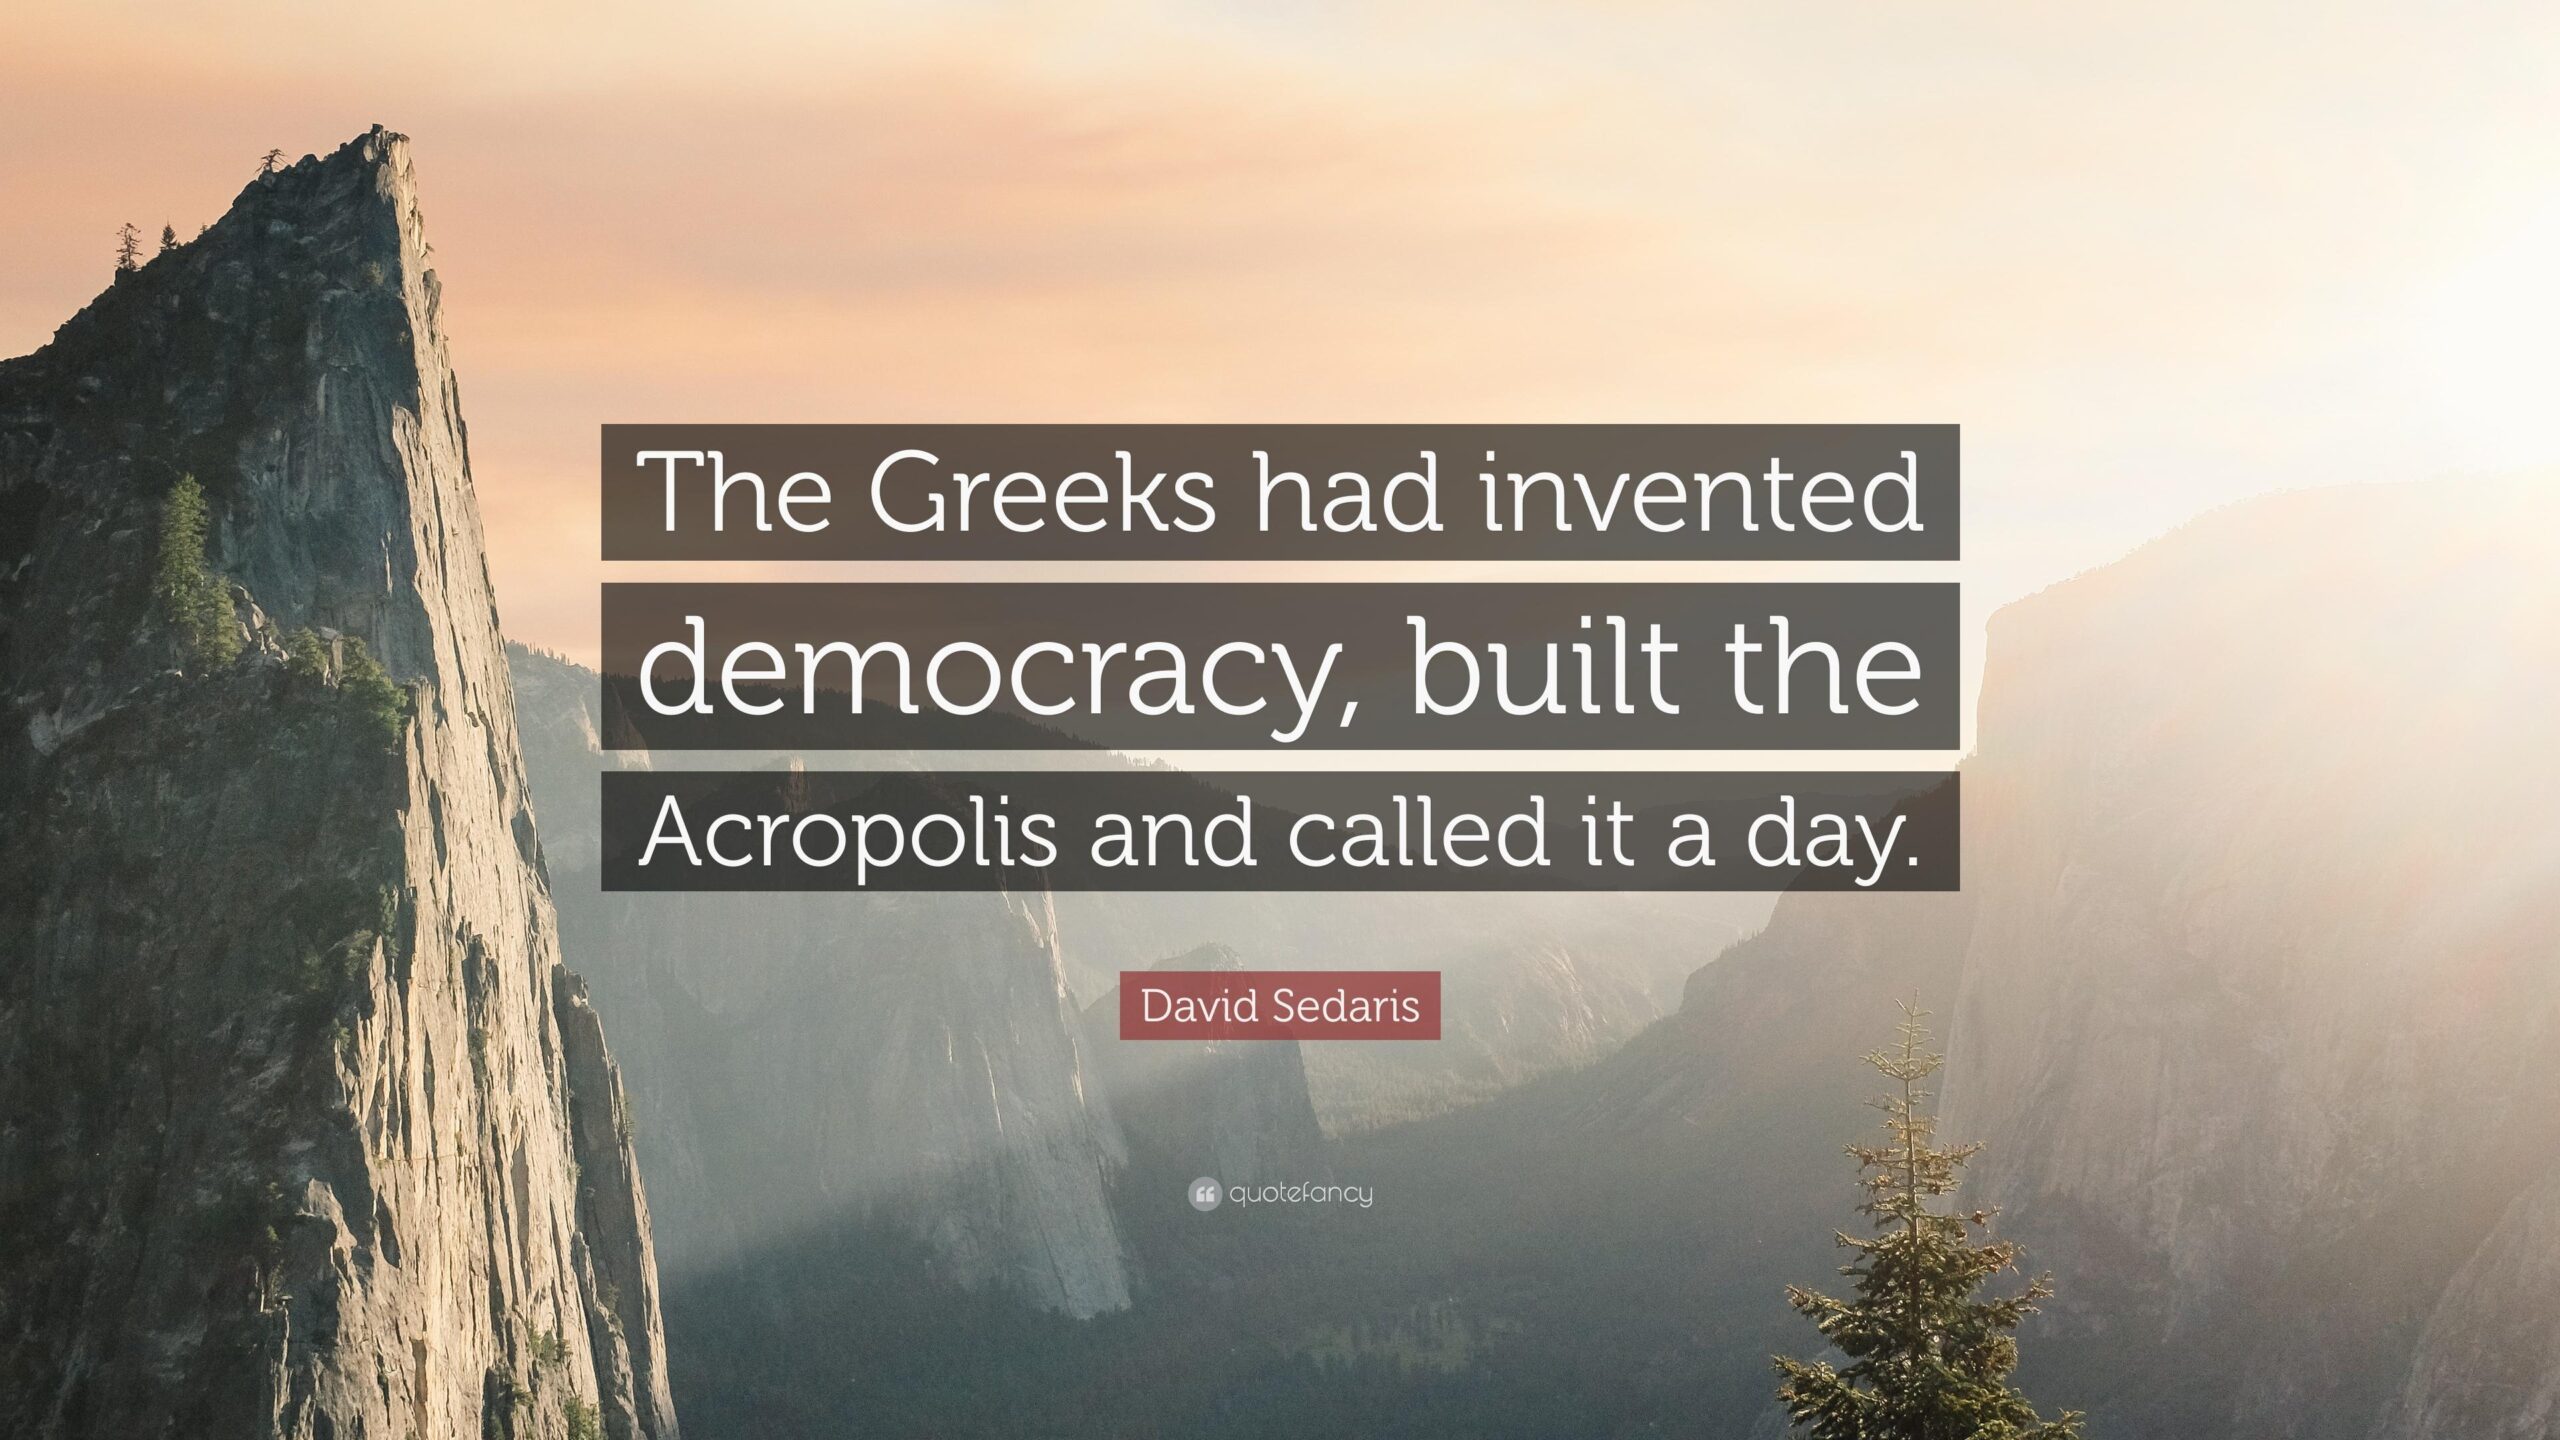 David Sedaris Quote “The Greeks had invented democracy, built the